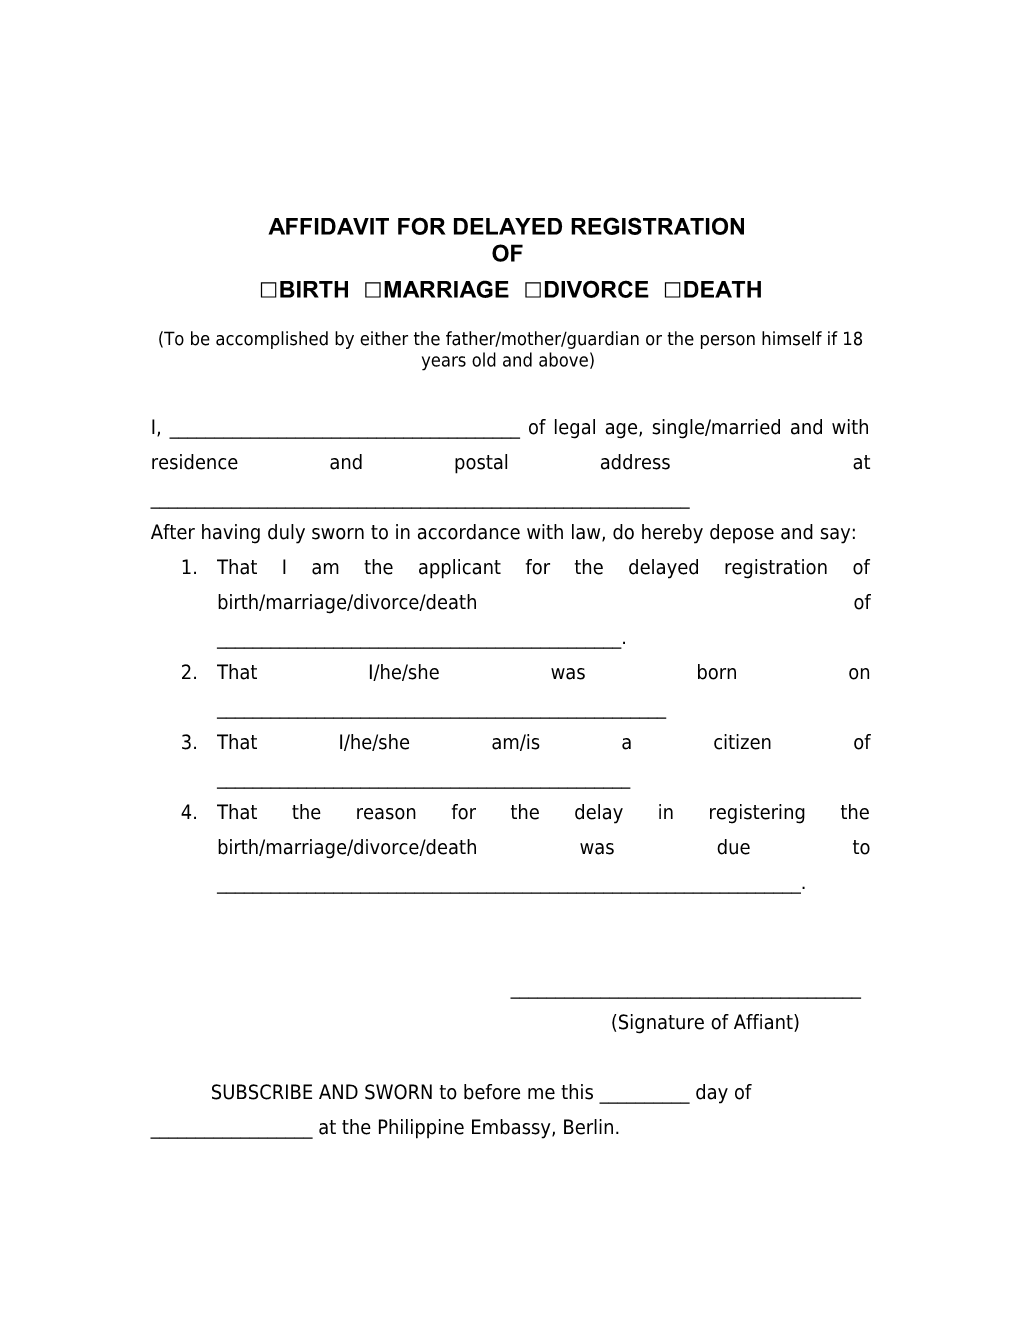 Affidavit for Delayed Registration of Birth